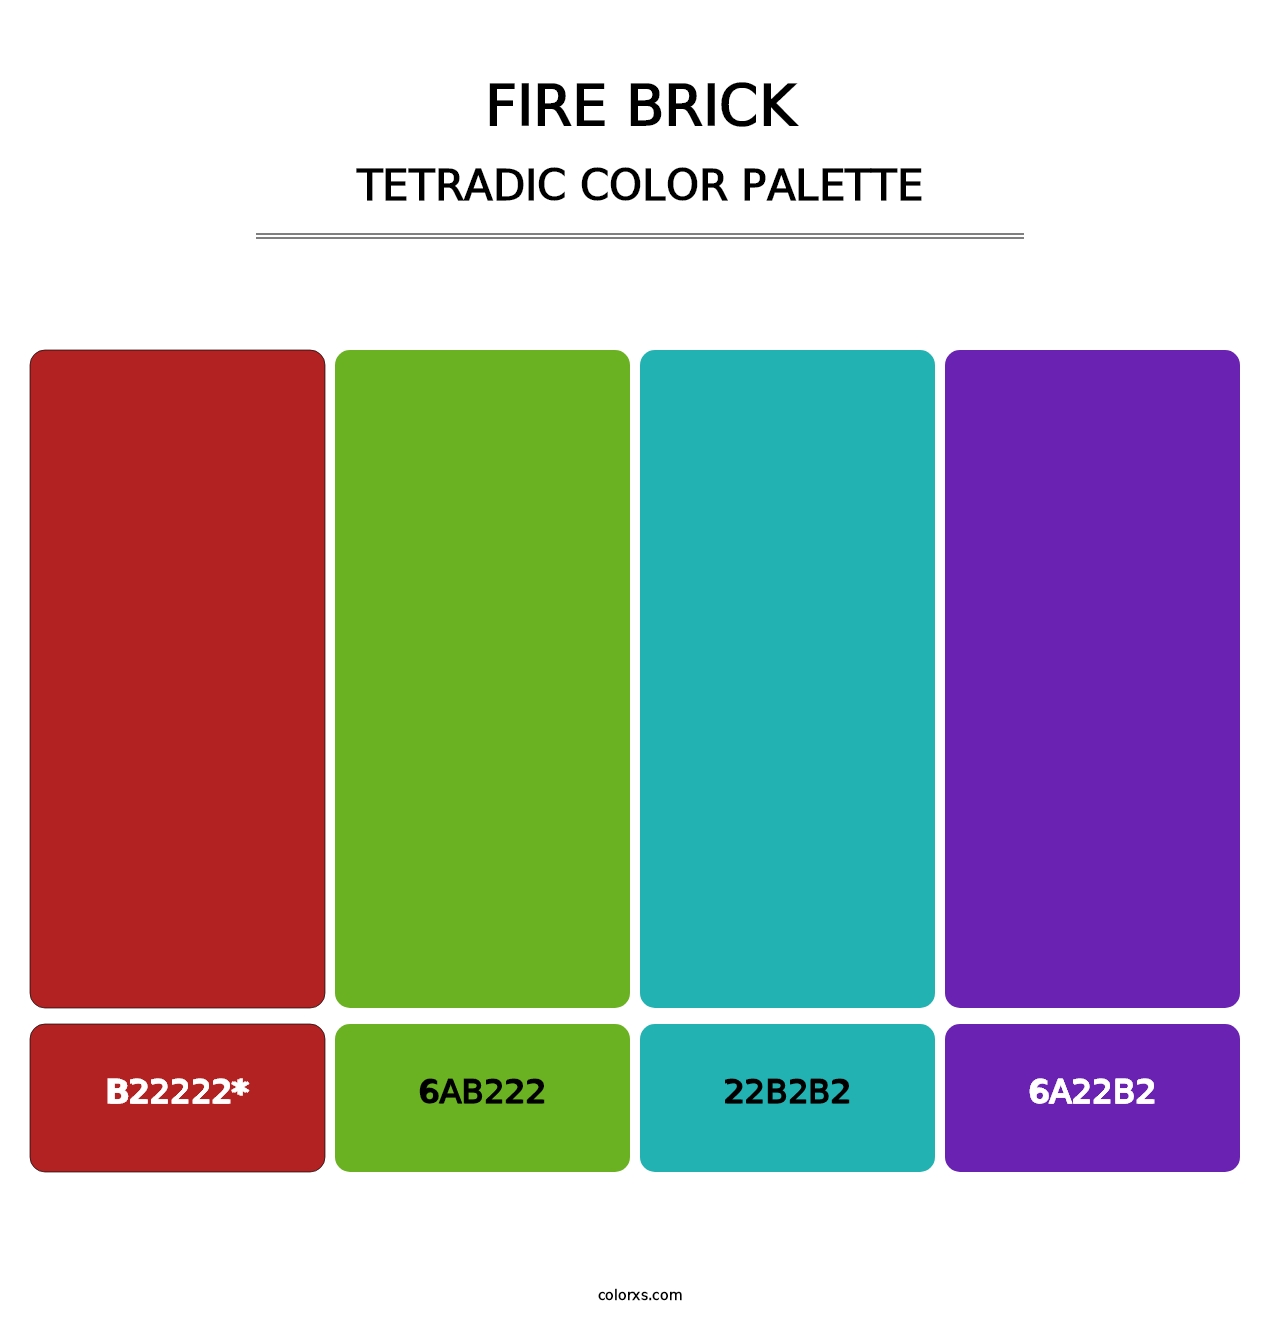 Fire Brick - Tetradic Color Palette